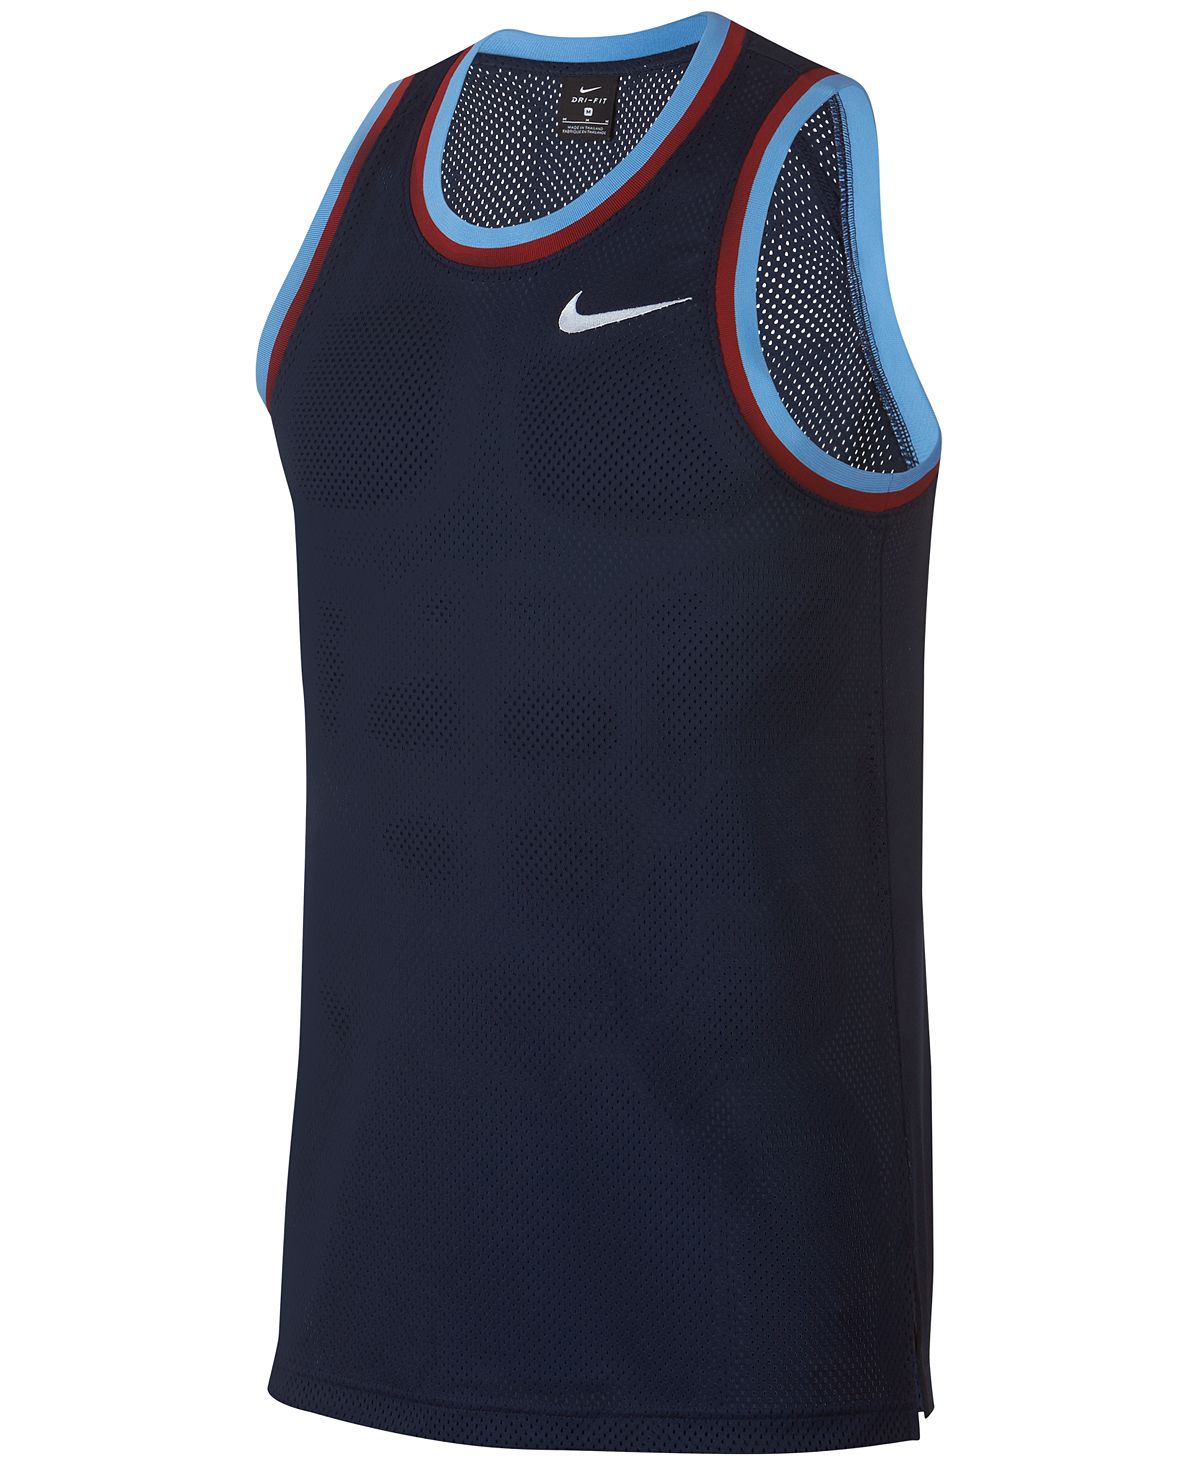 Nike Dri-fit Mesh Basketball Jersey Navy